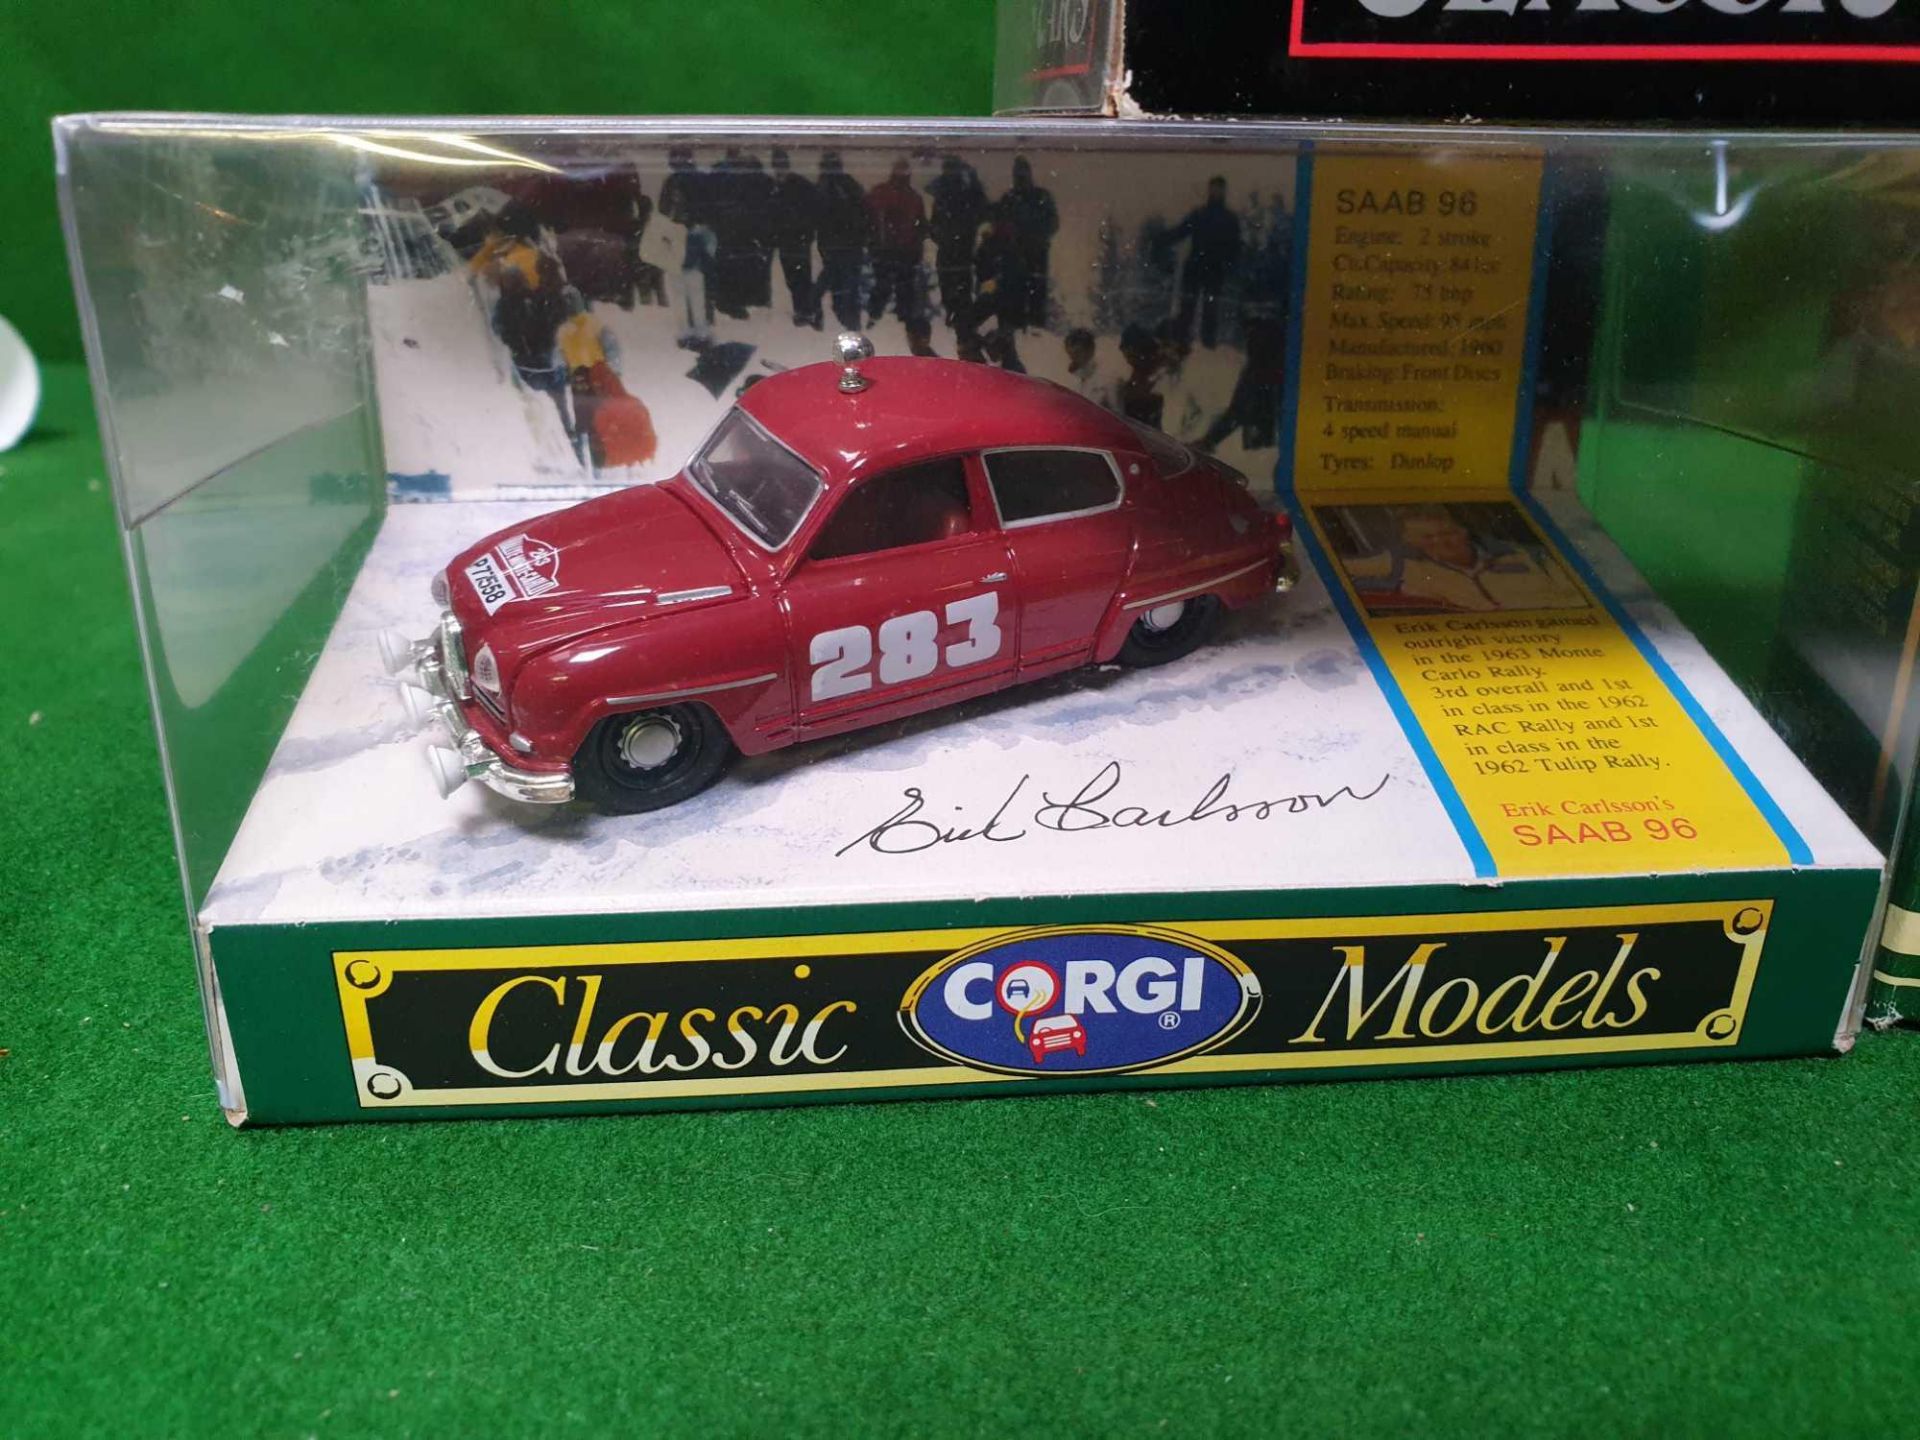 A Set Of 3 X Corgi Models Comprising Of #D7121 Corgi D712/1 Saab 96 1963 Monte Carlo Rally #C701-1 - Image 3 of 4